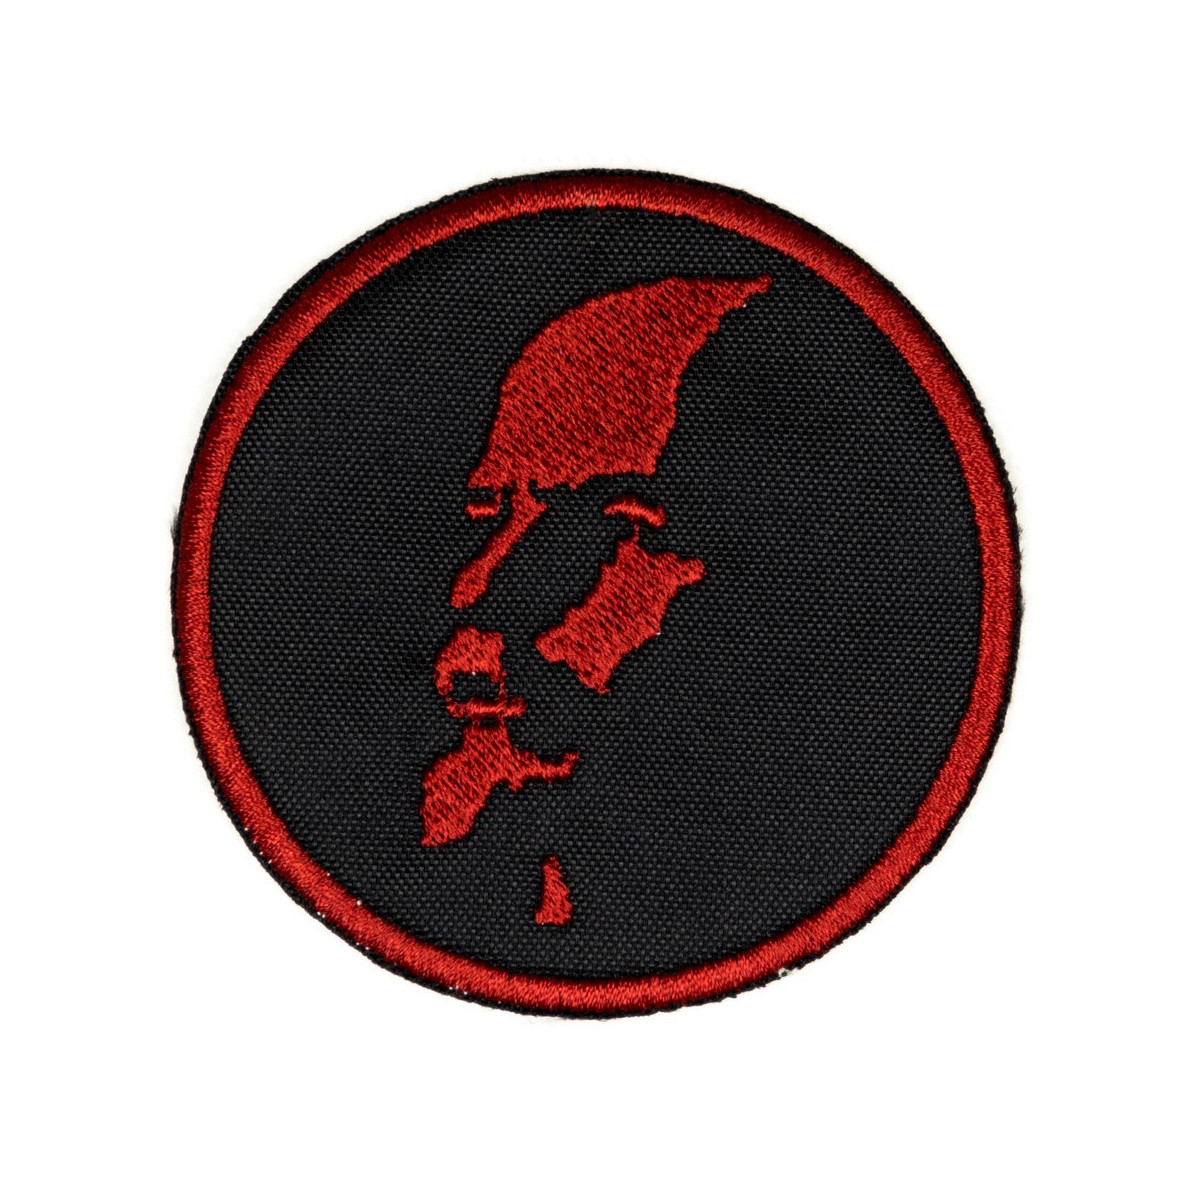 Lenin Patch